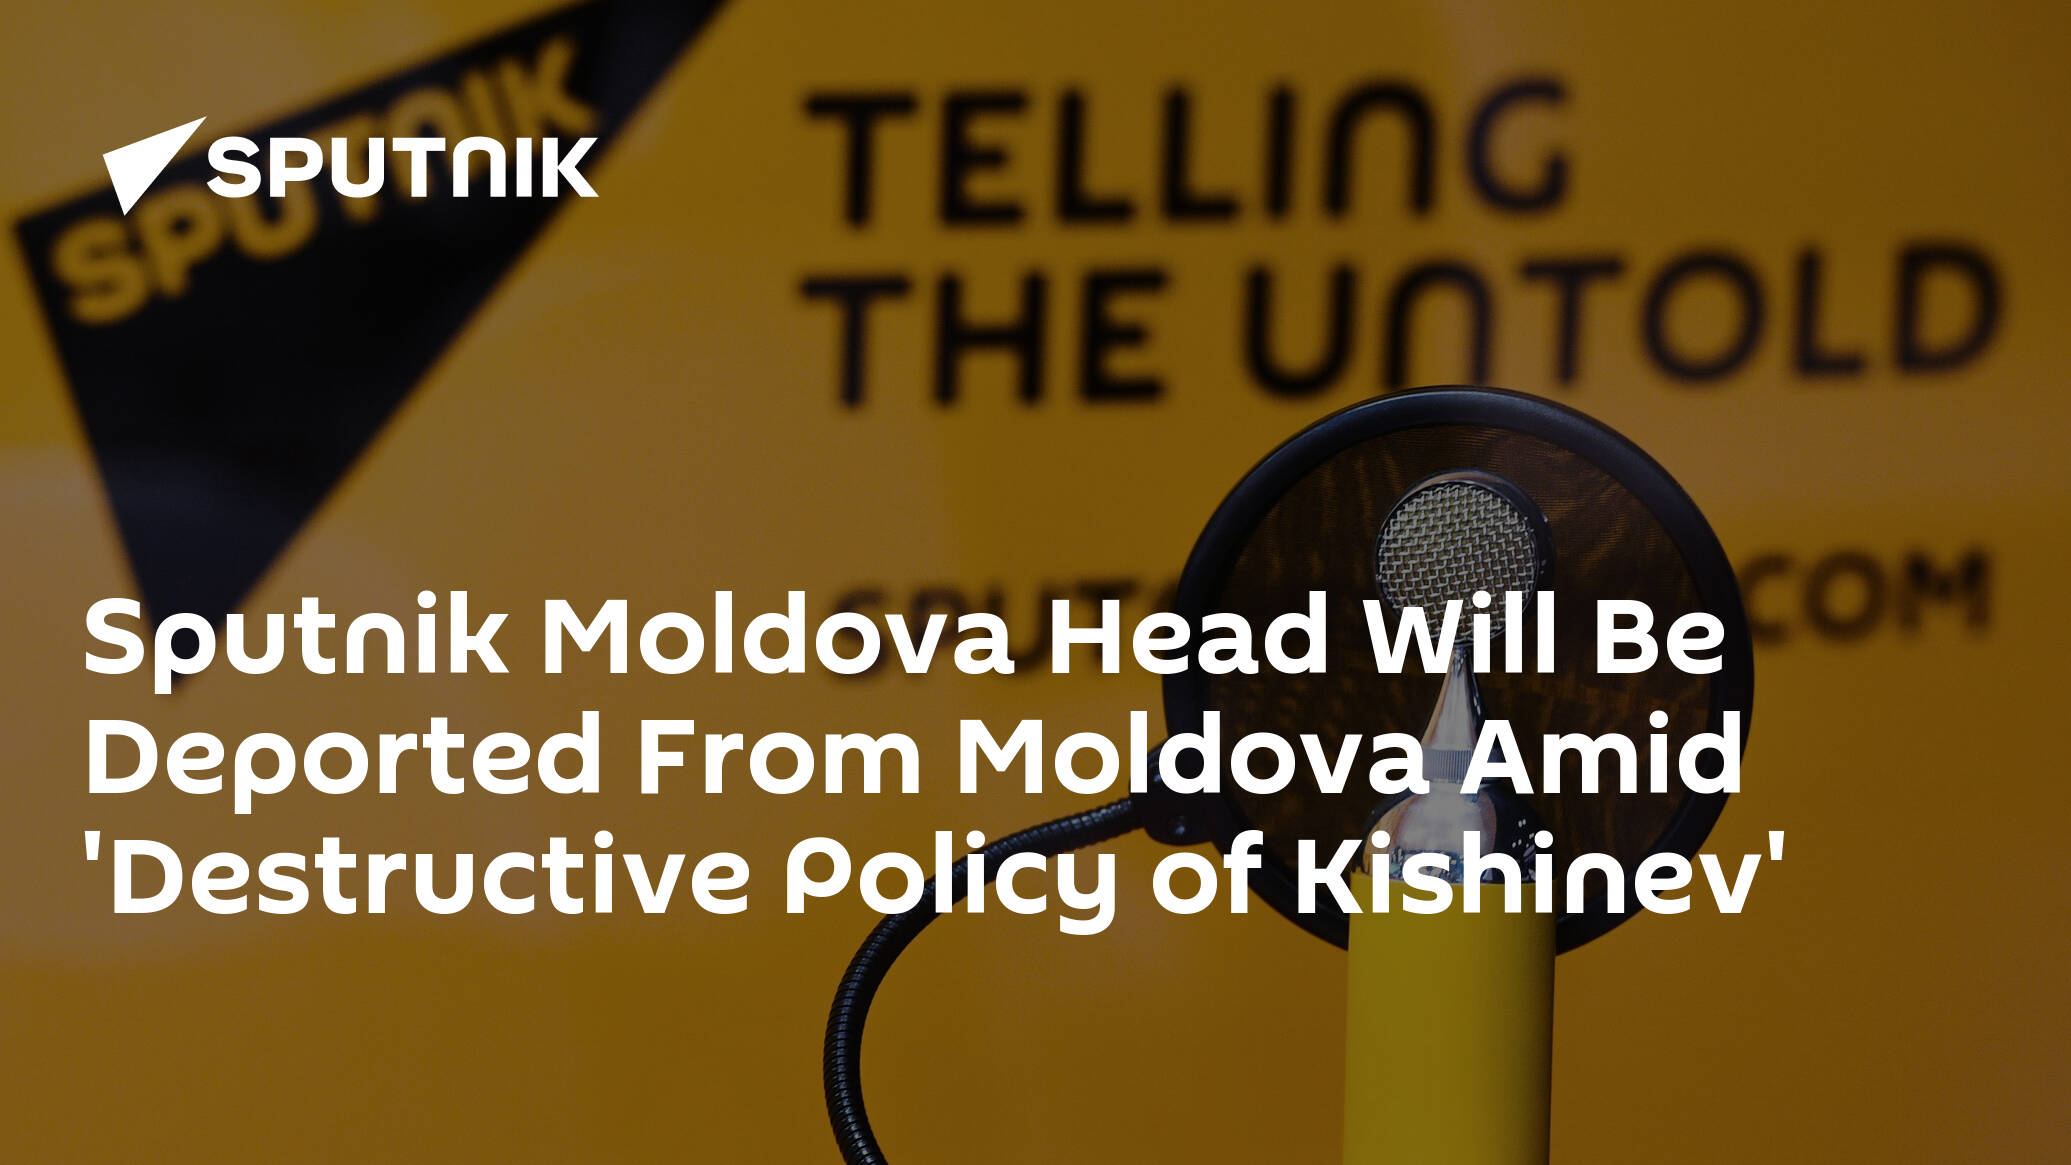 Sputnik Head: Destructive Policy of Kishinev Crosses All Adequate Boundaries of State Relations